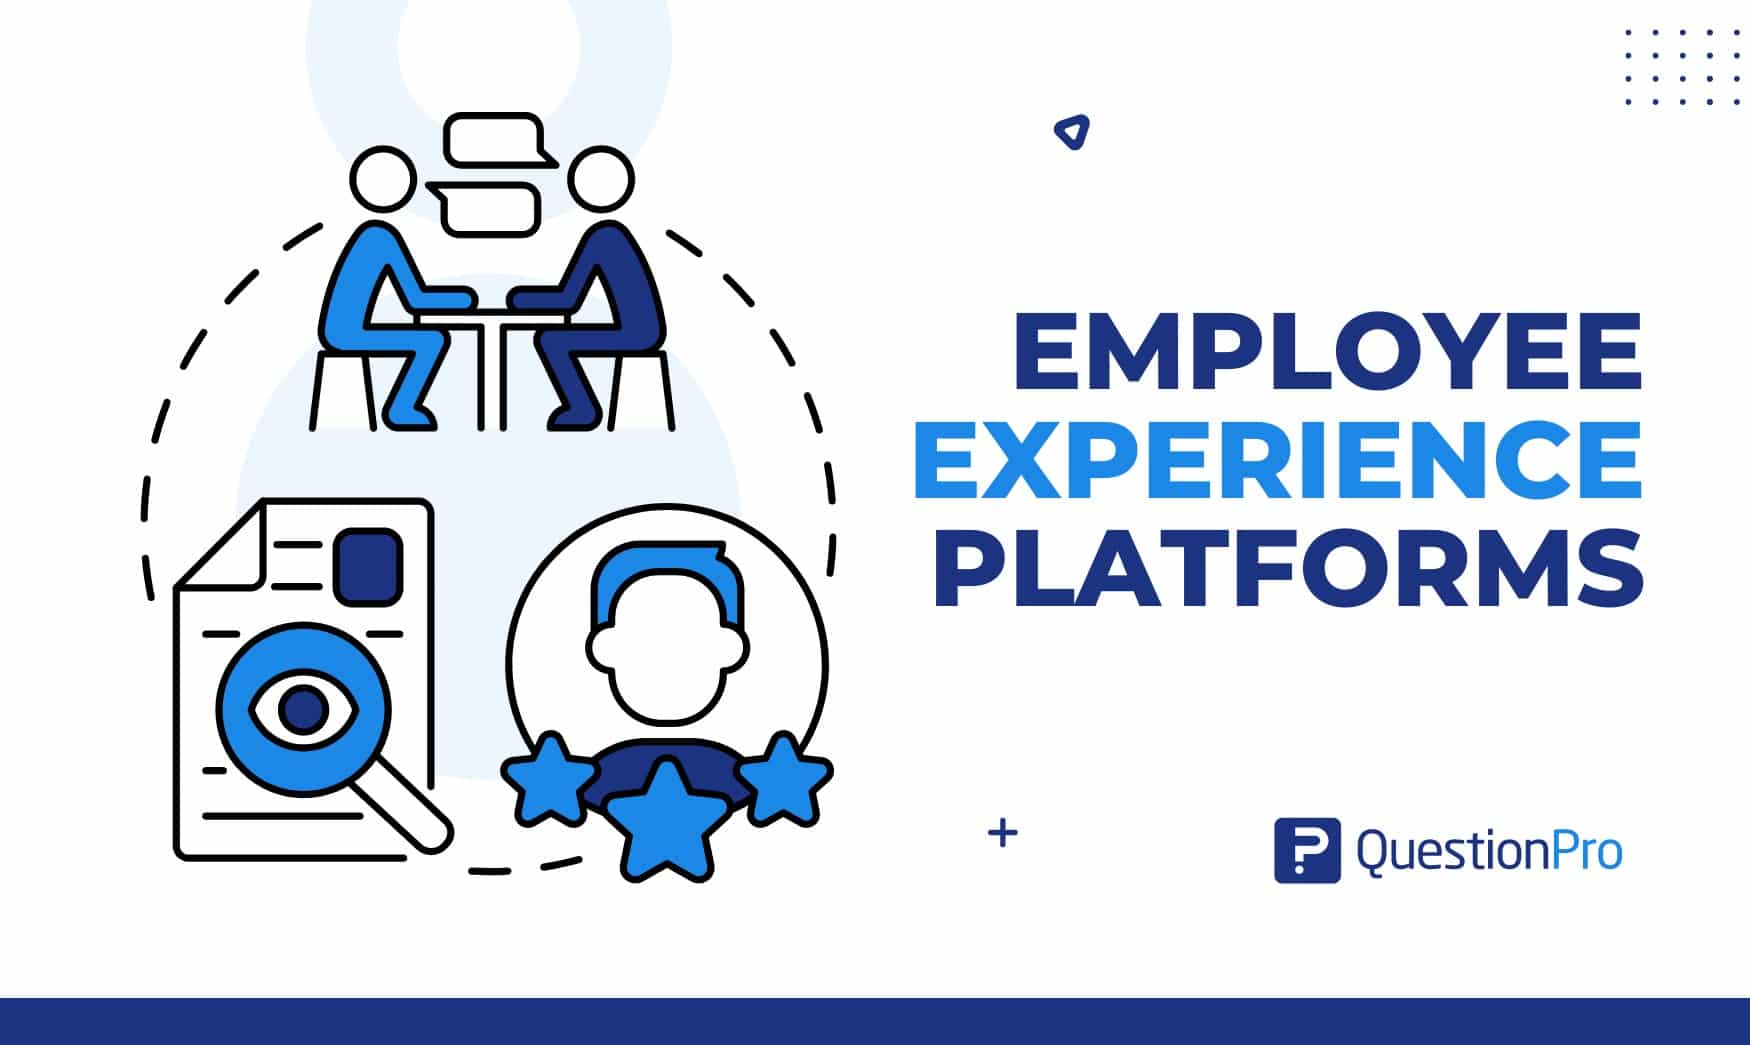 Employee Experience Platforms